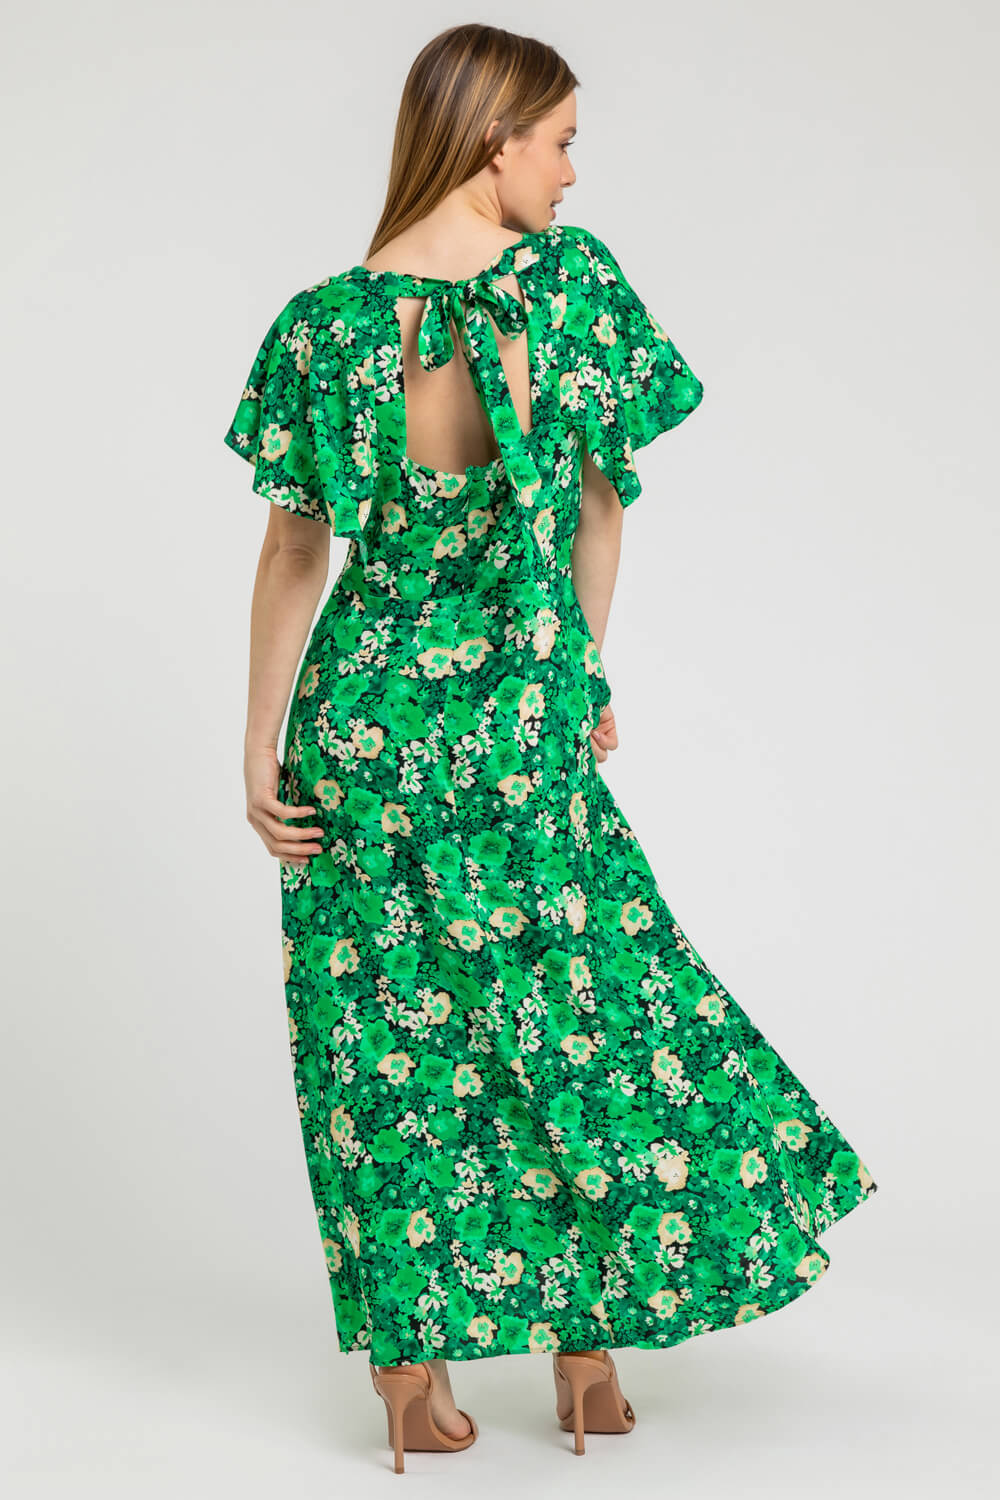 Petite Ditsy Floral Print Maxi Dress in Green - Roman Originals UK